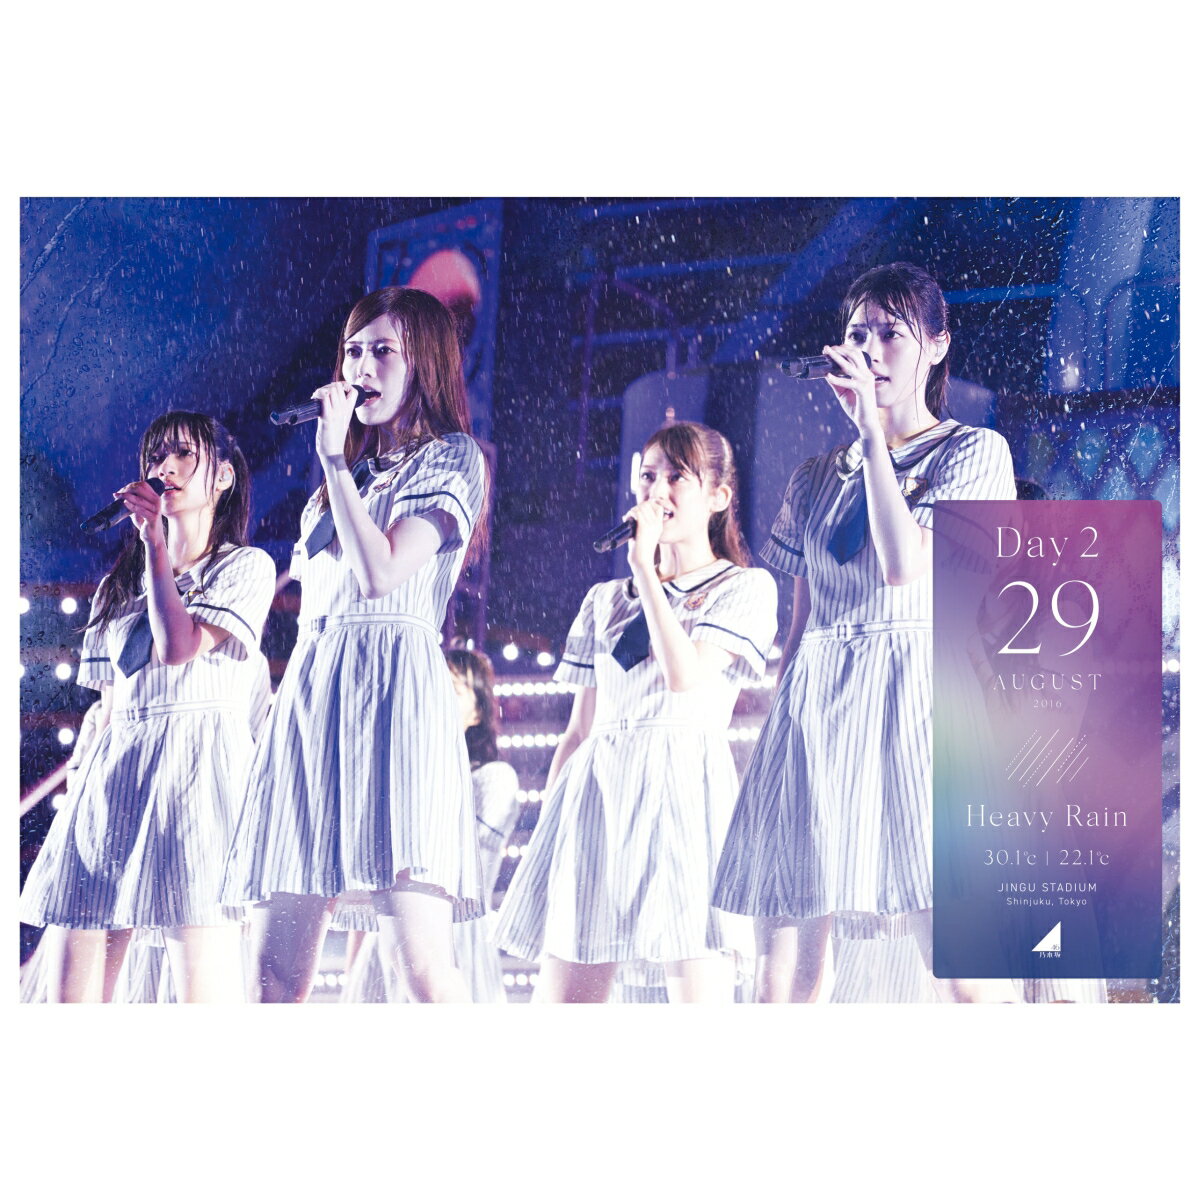 乃木坂46 4th YEAR BIRTHDAY LIVE 2016.8.28-30 JINGU STADIUM Day2【Blu-ray】 乃木坂46